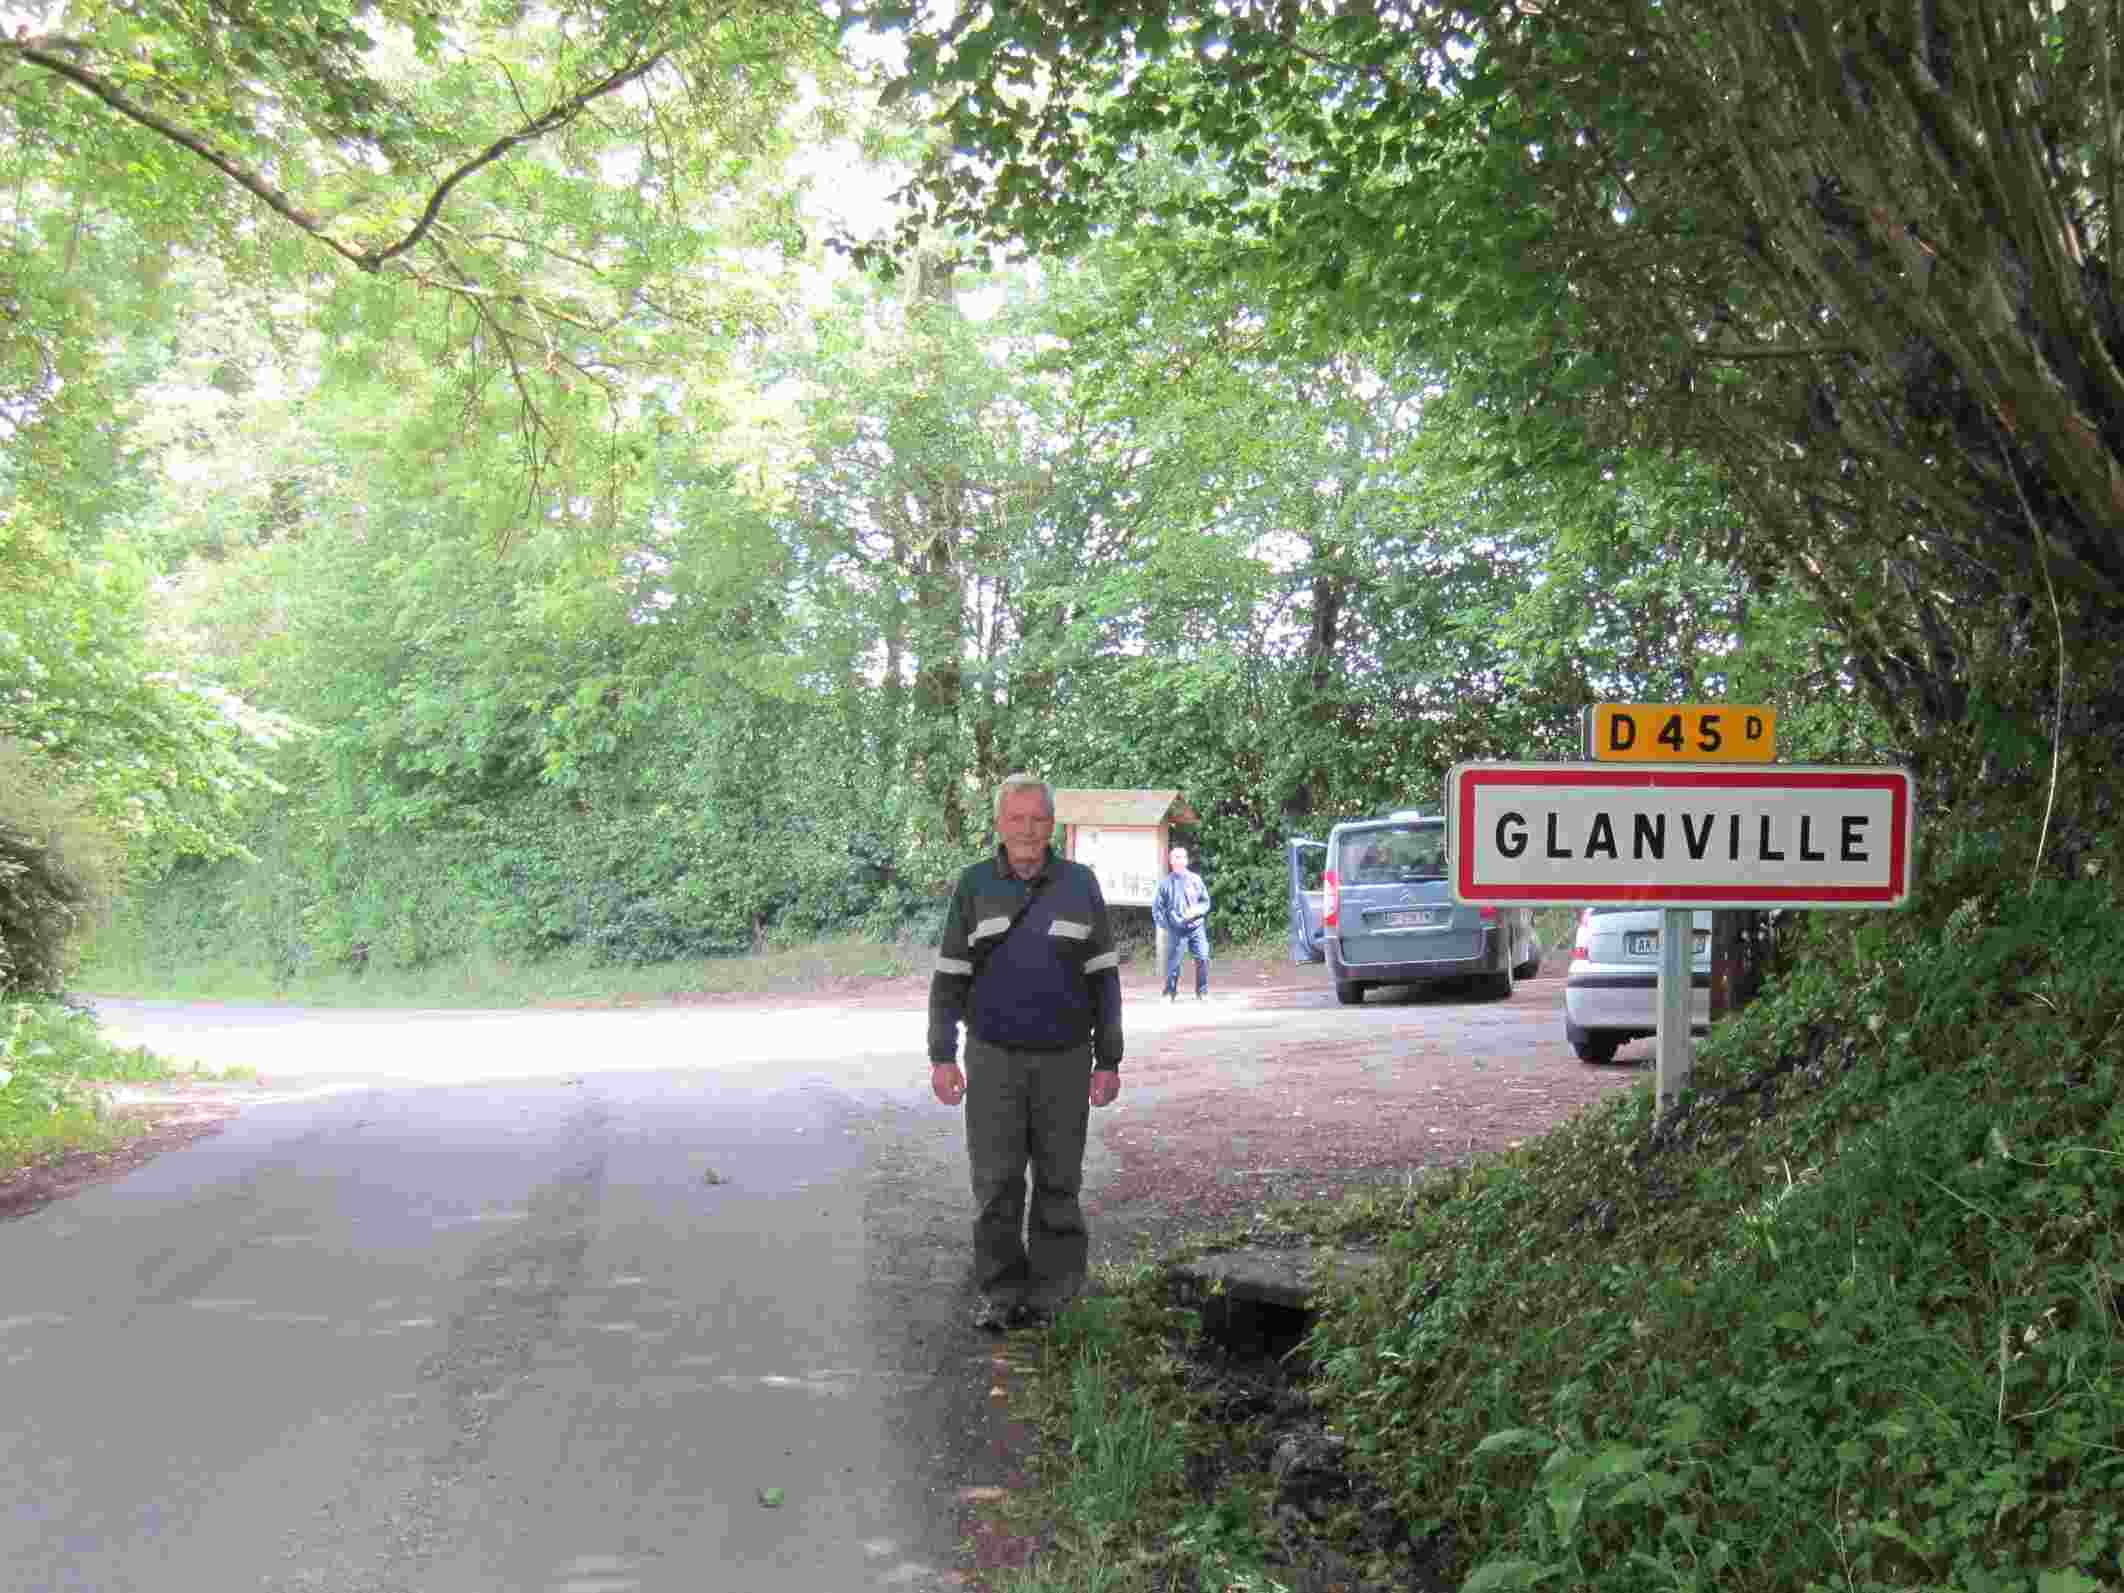 Western entrance to Glanville